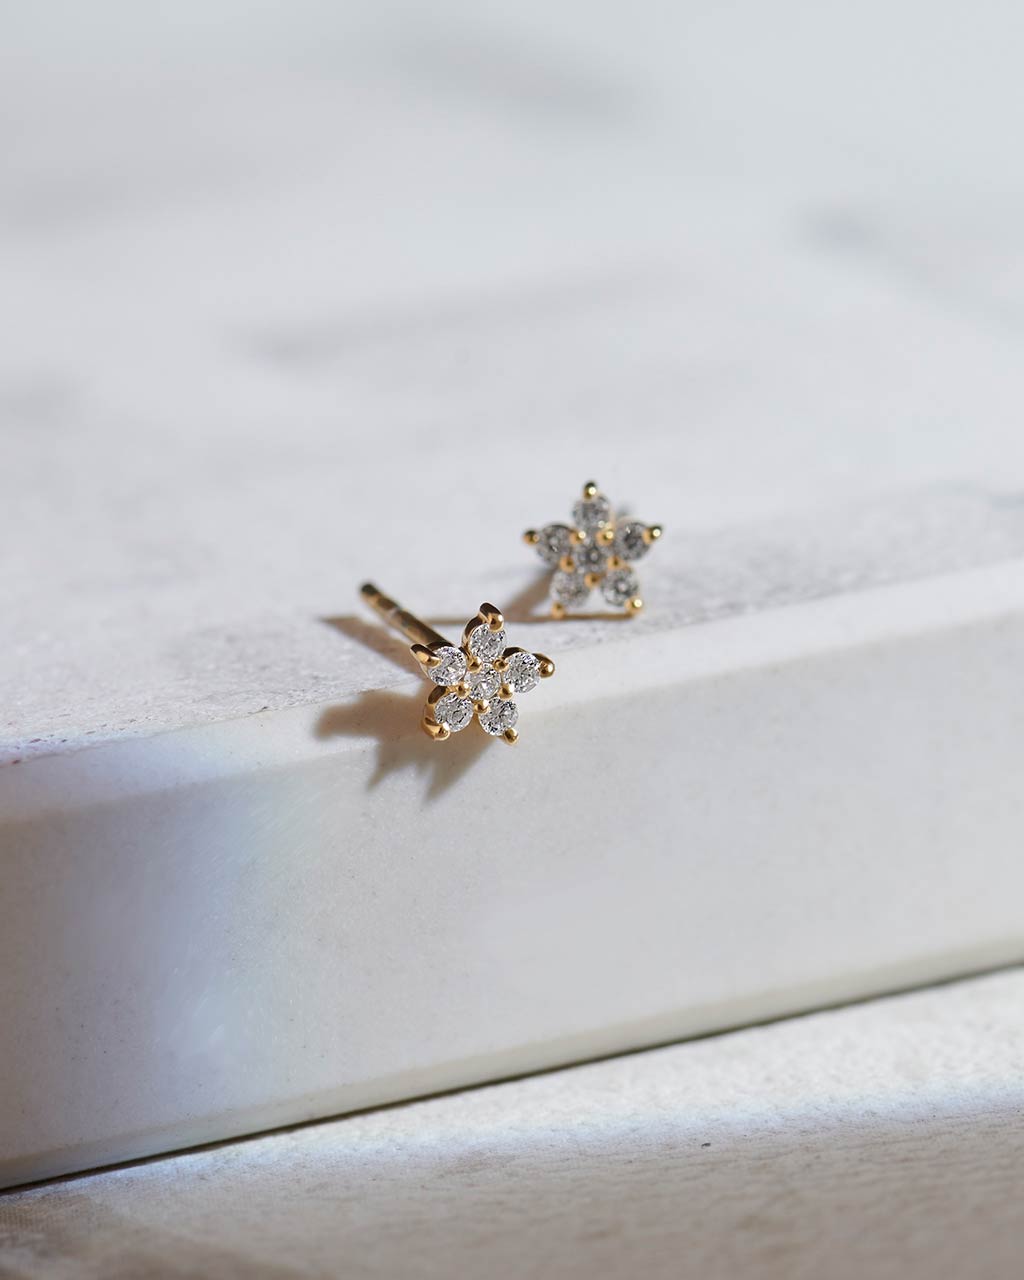 Floral Small Diamond Earrings